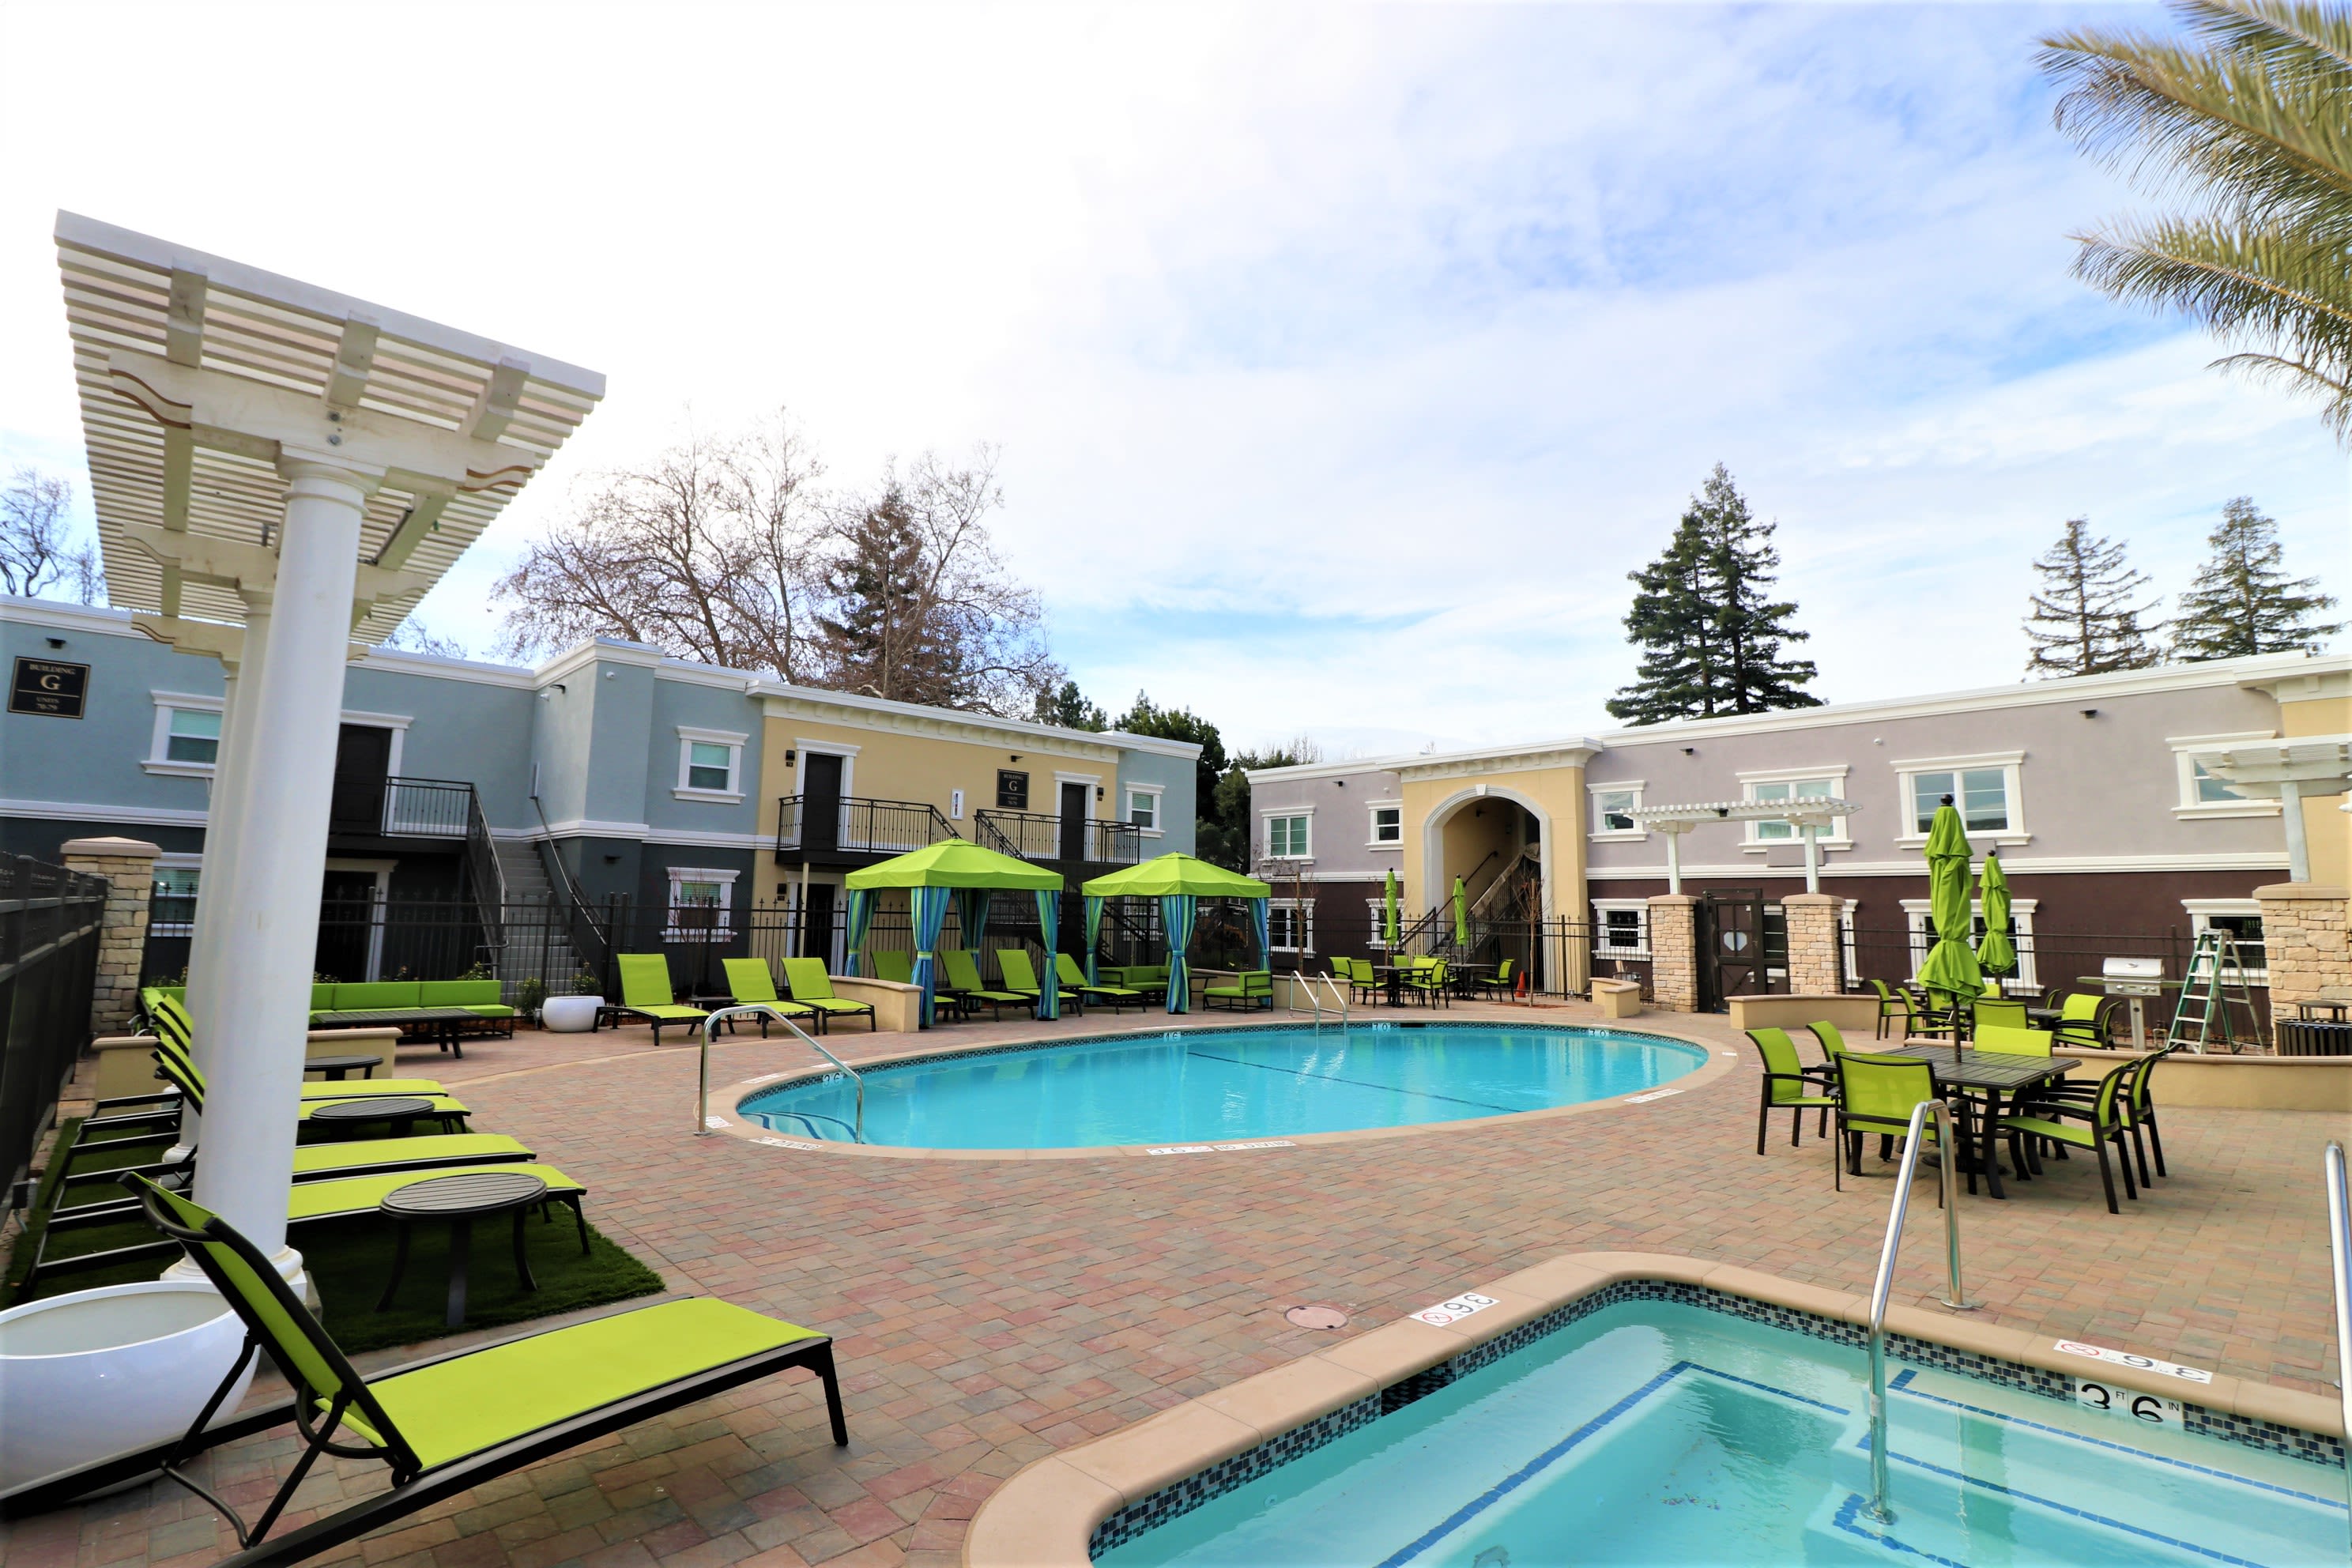 Resort-style swimming pool at Ramblewood Apartment Homes in Fremont, California